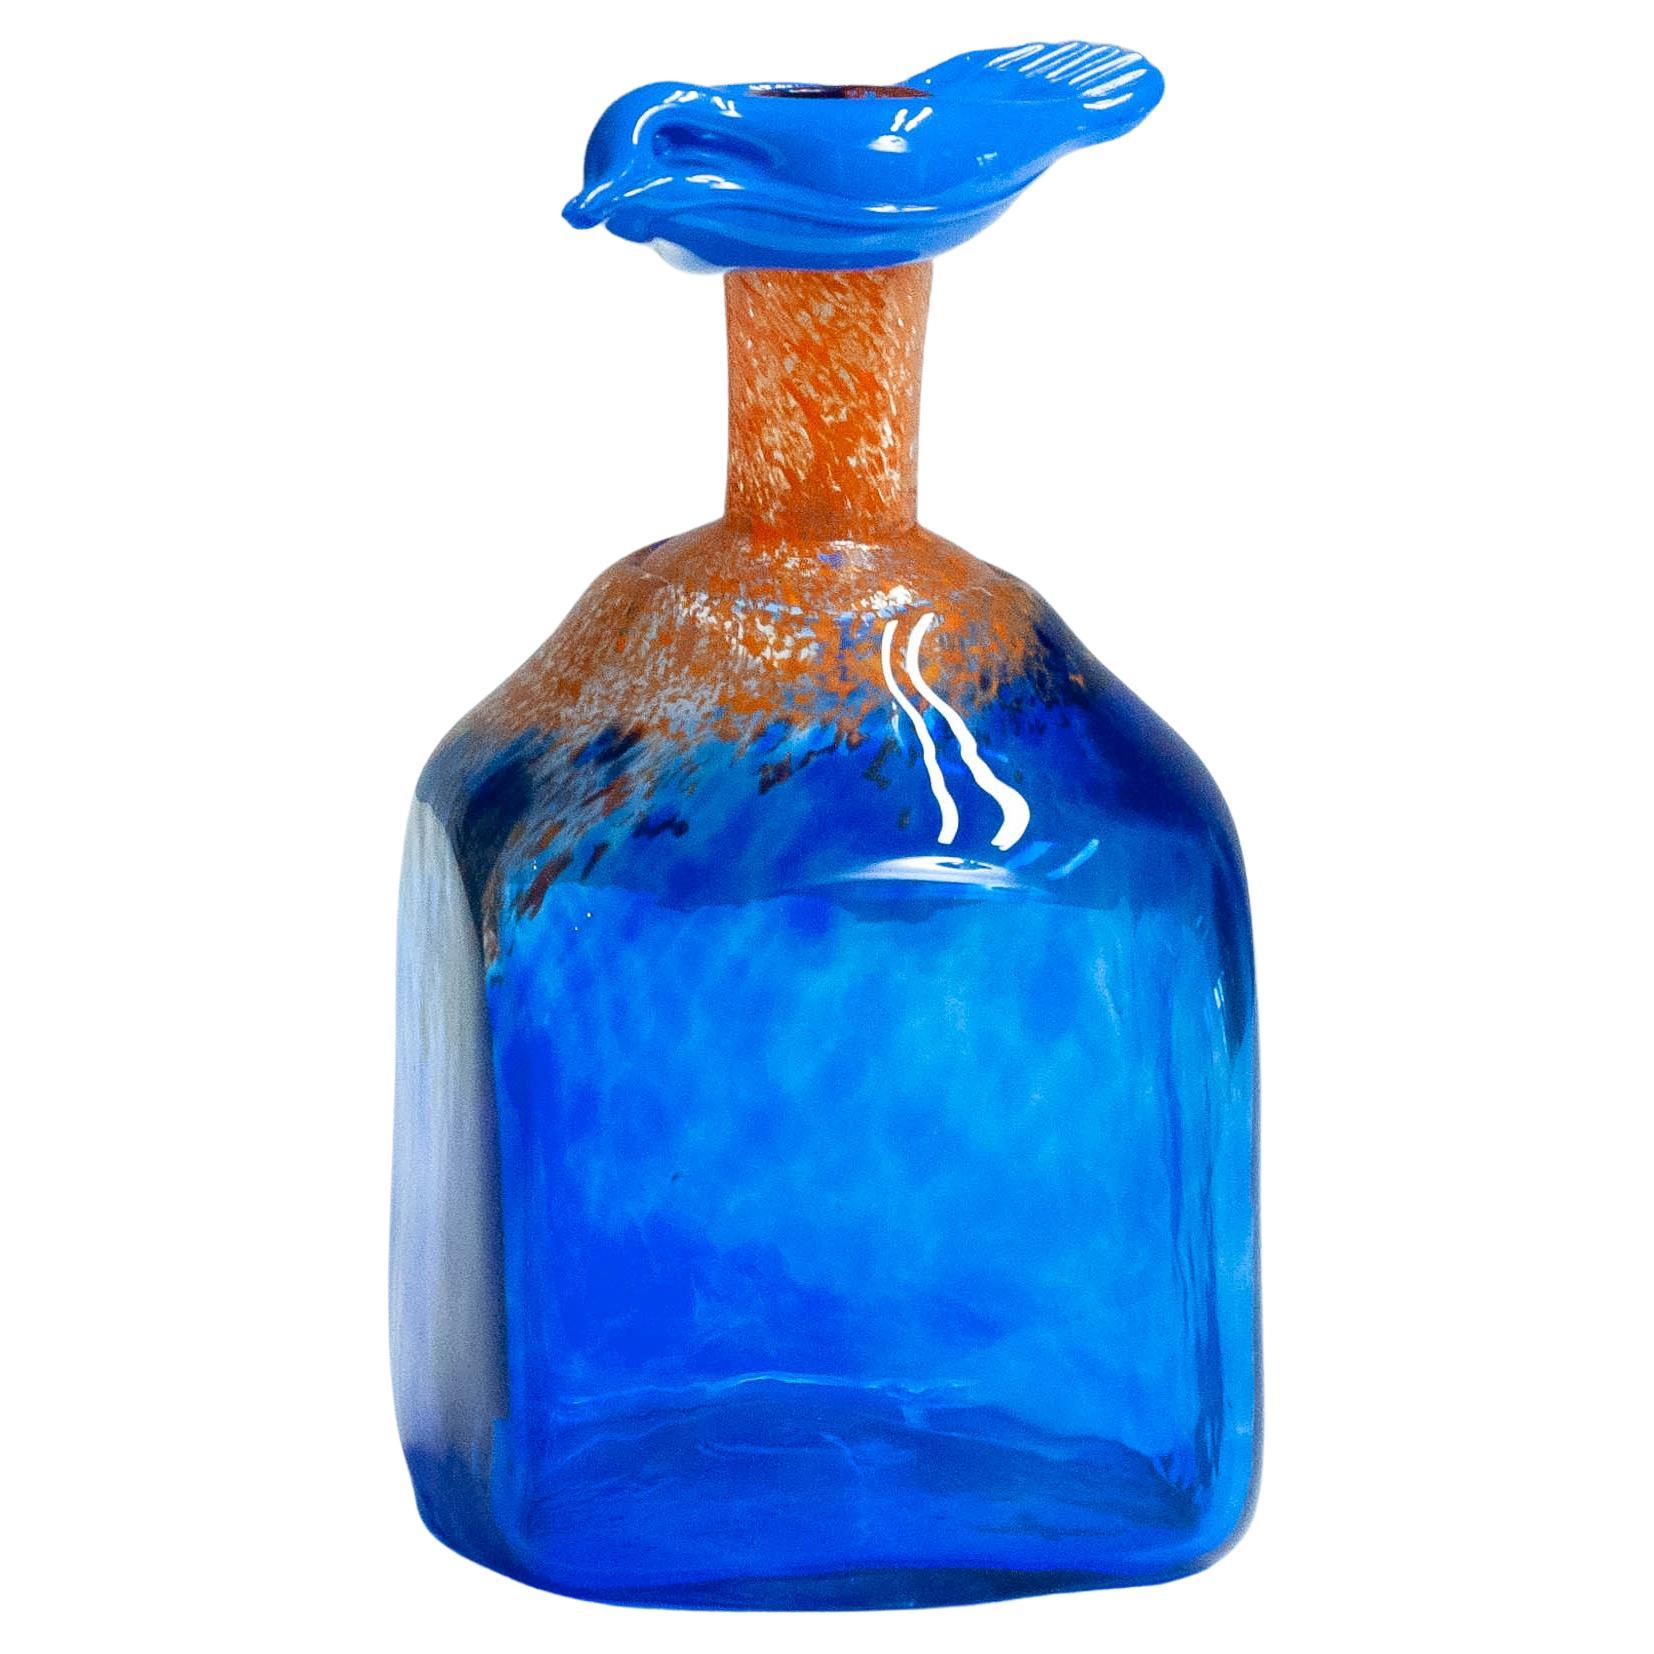 1980s Blue Art Glass Bottle Handmade by Staffan Gellerstedt at Studio Glashyttan